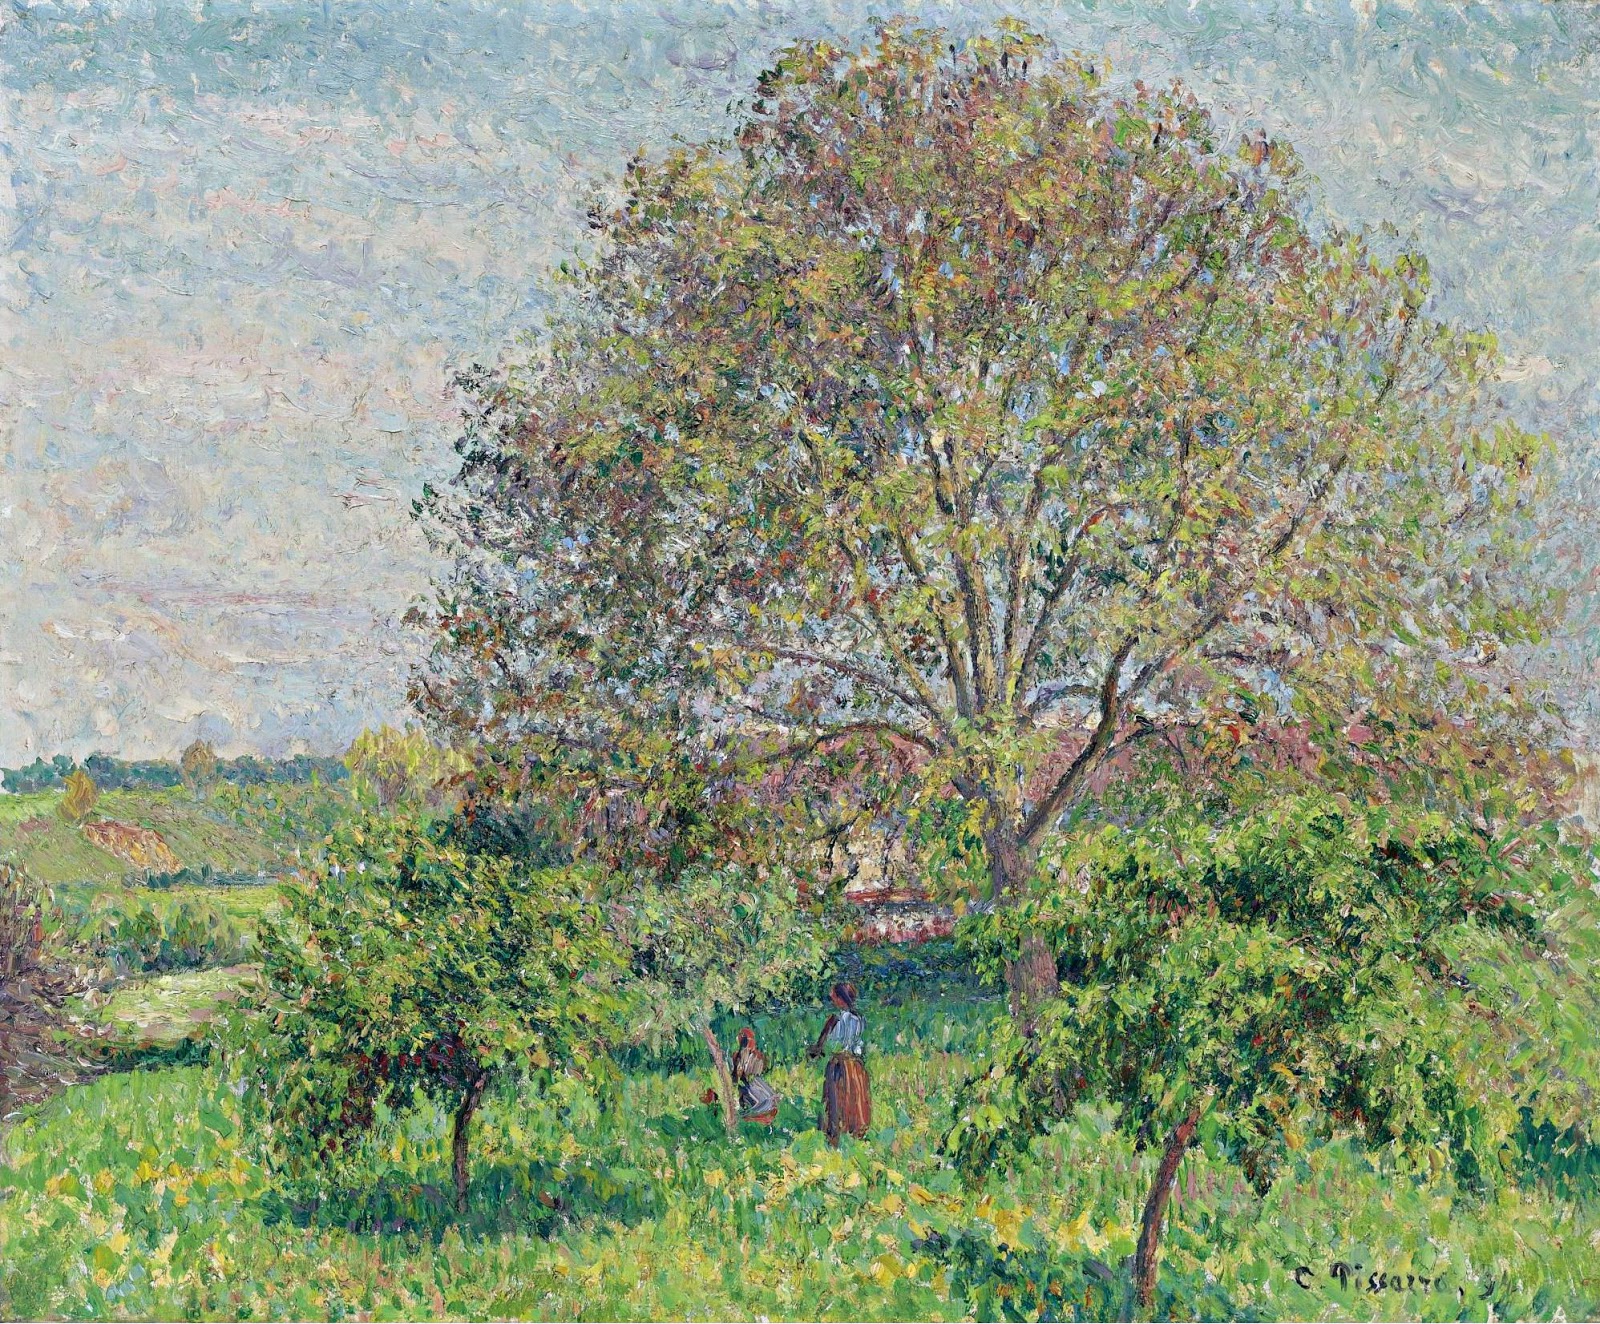 Camille+Pissarro-1830-1903 (376).jpg